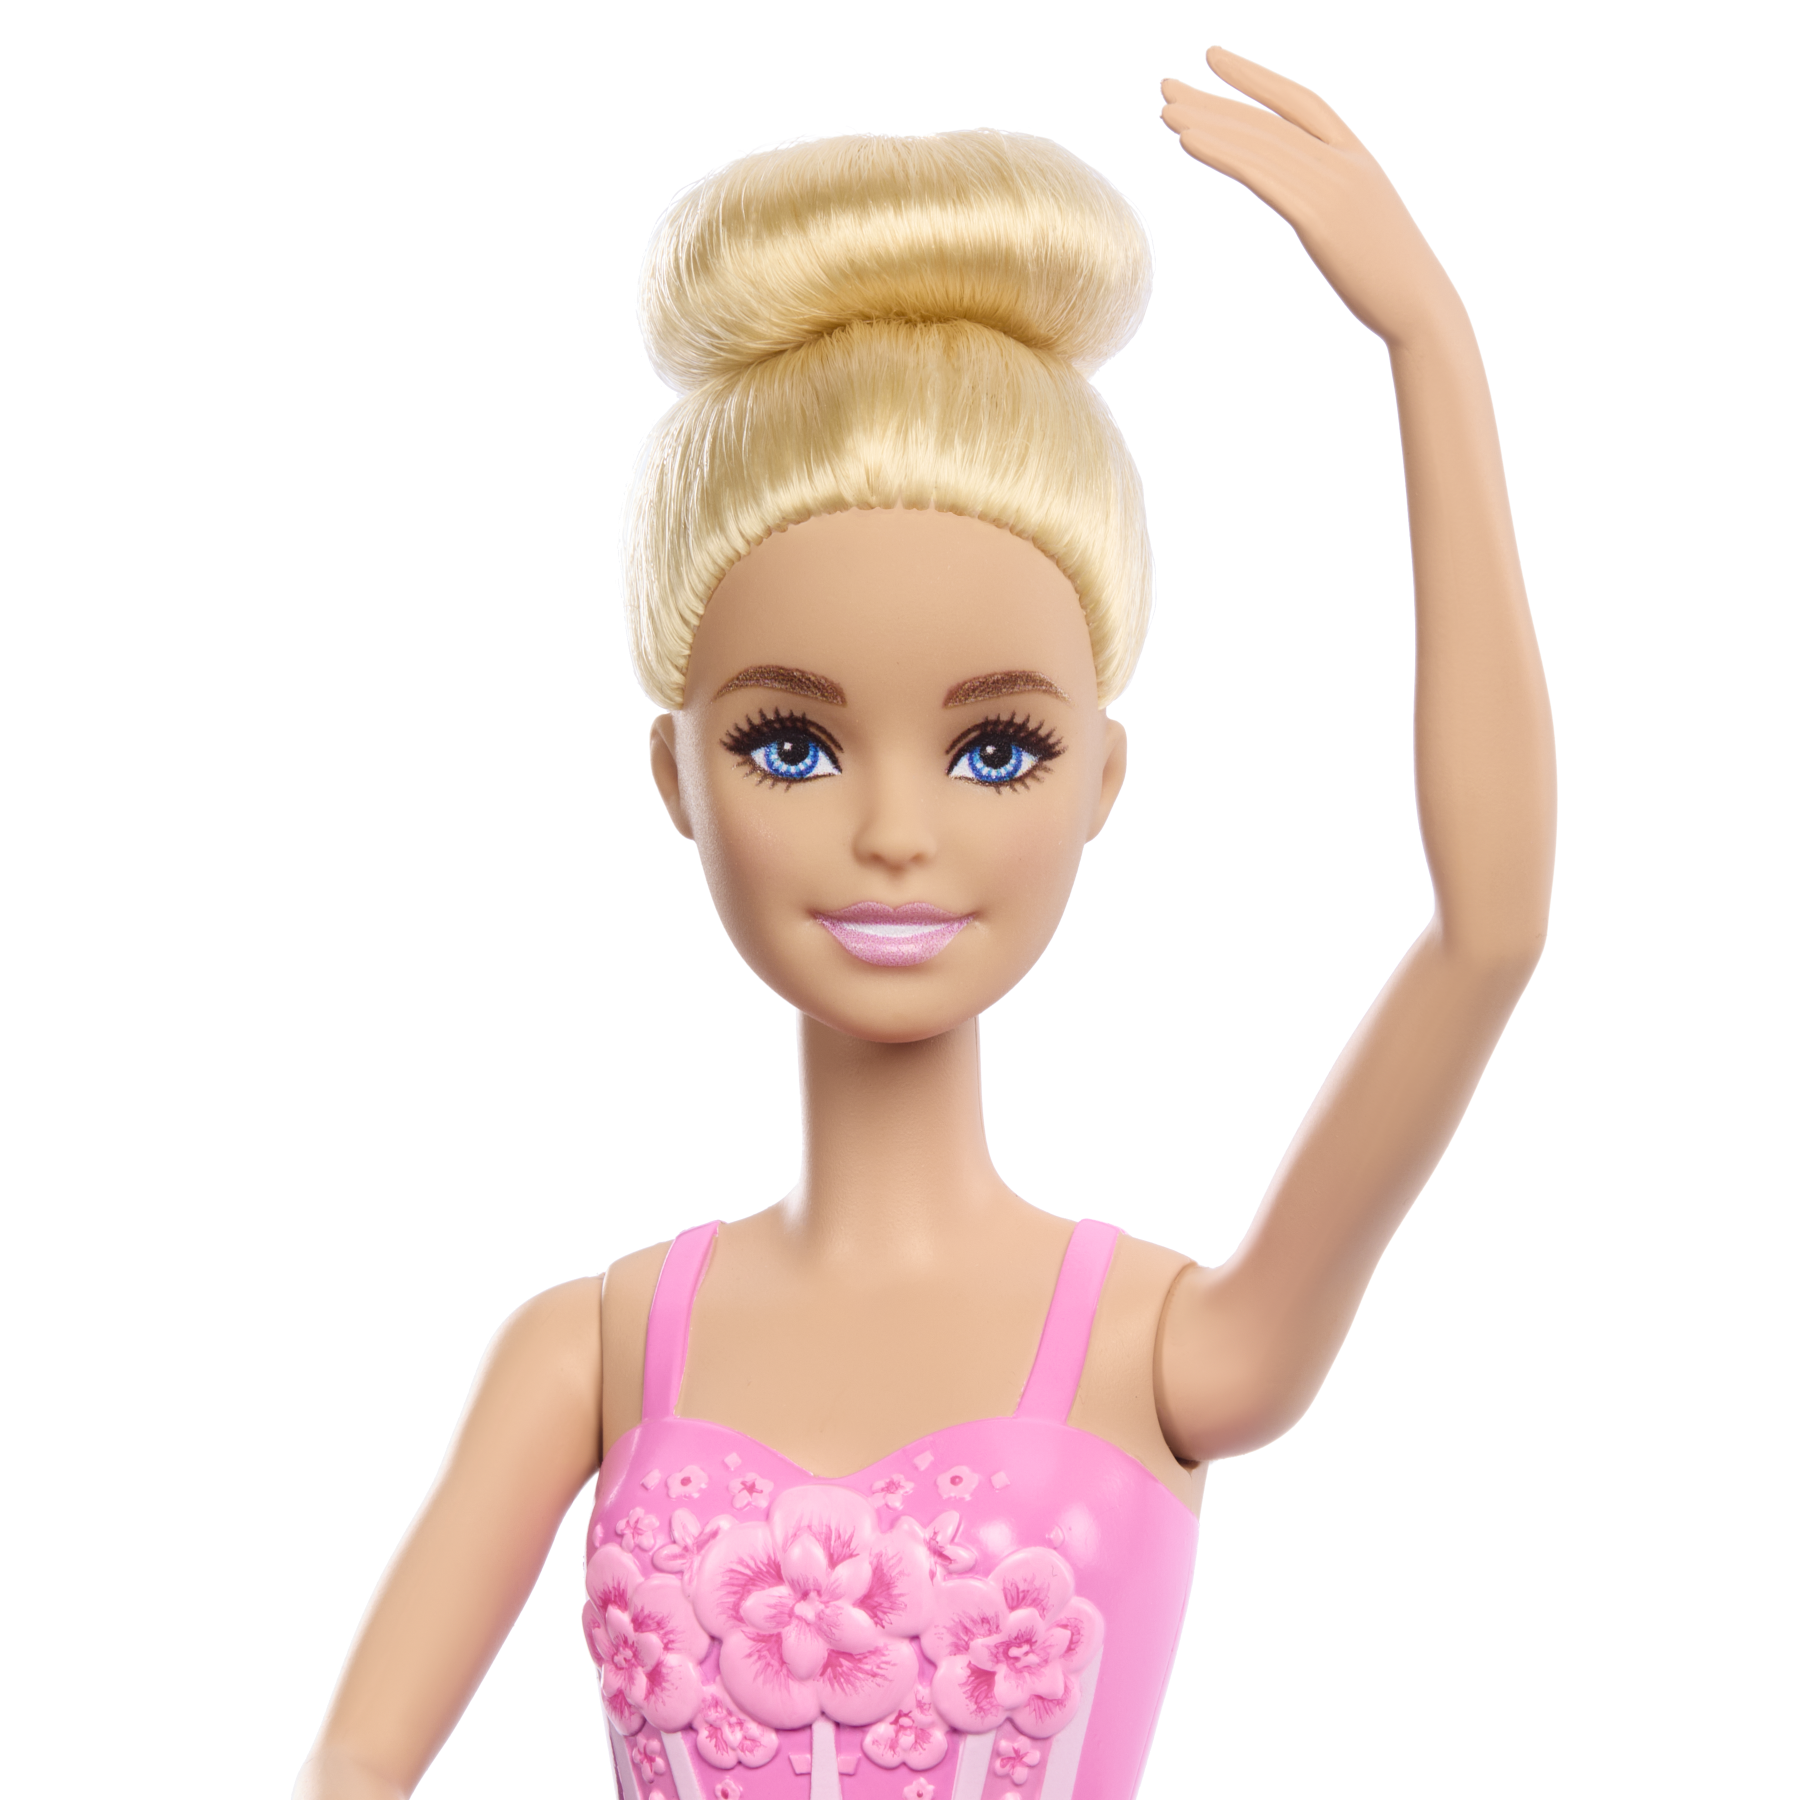 Barbie ballerina base, bambola snodata con tutù e chignon - Barbie